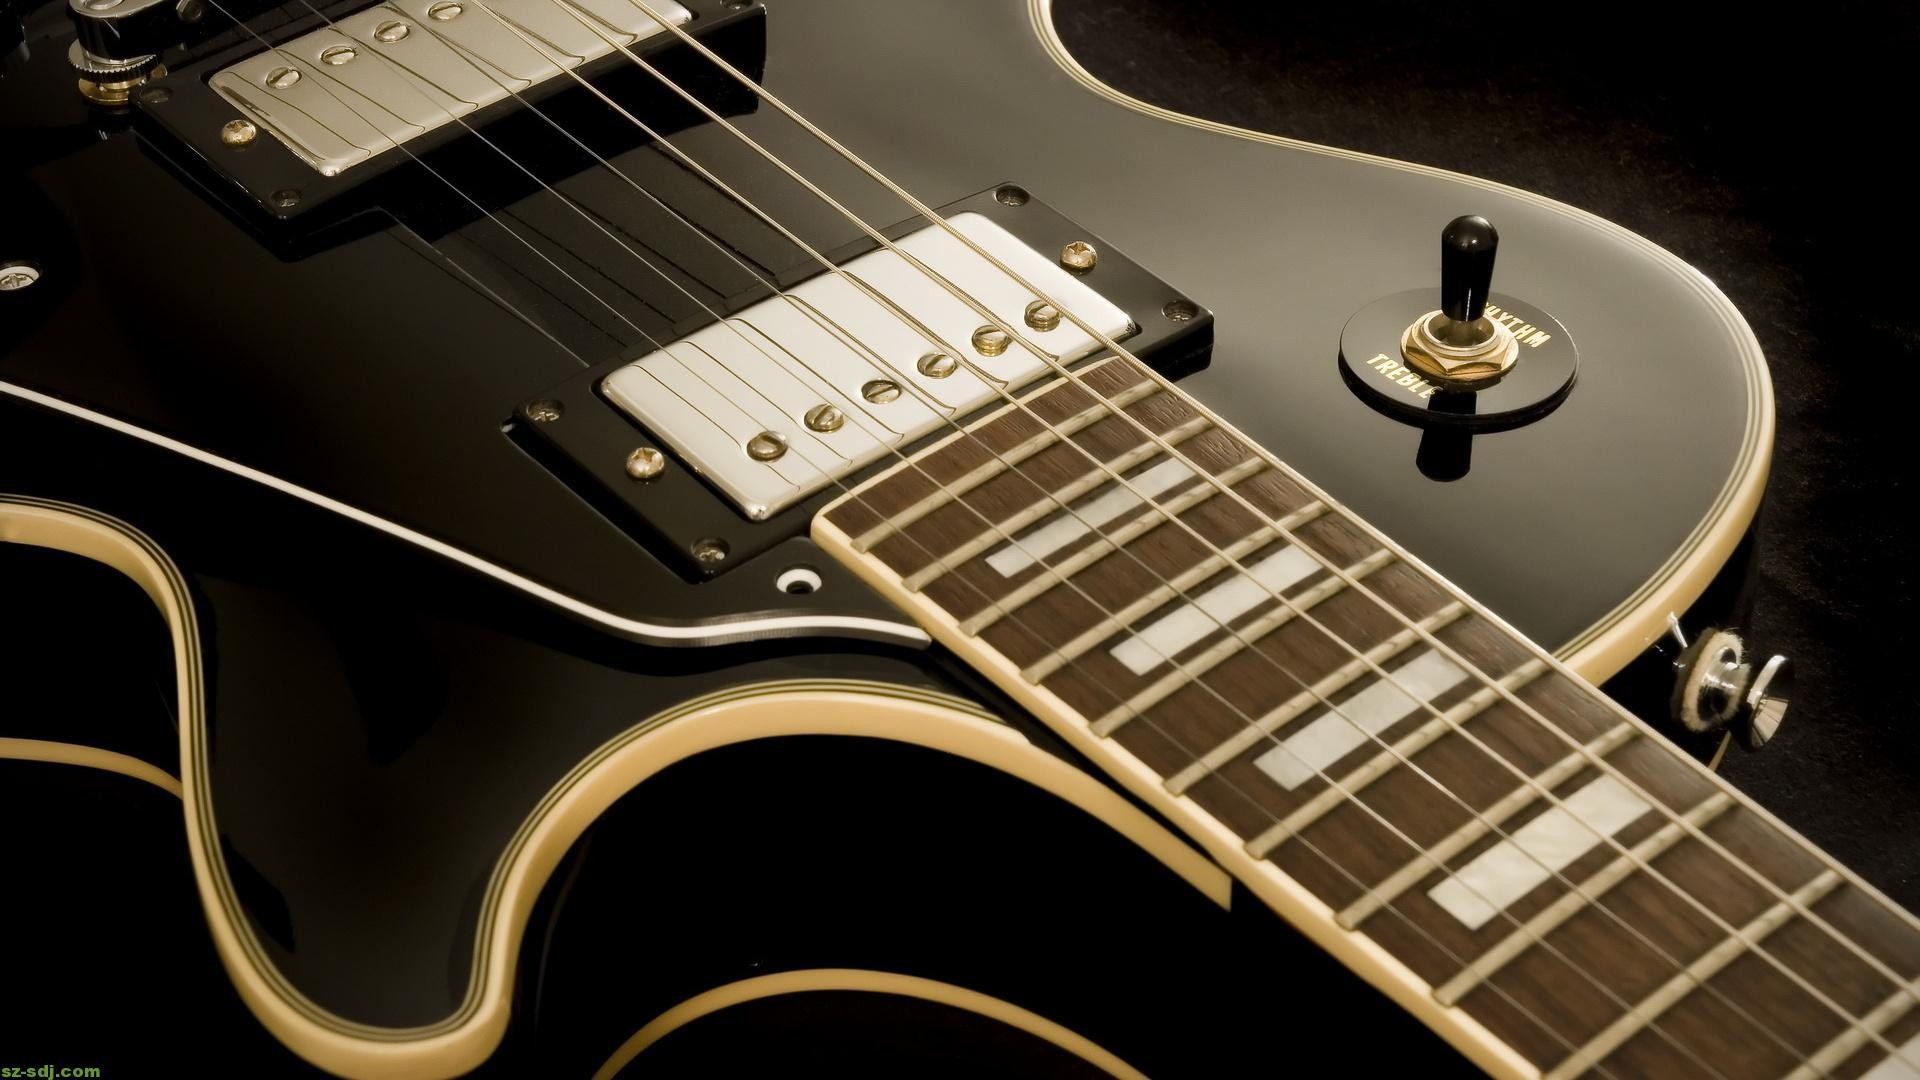 1920x1080 Fender guitar wallpaper hd - Fender guitars backgrounds - Fender .